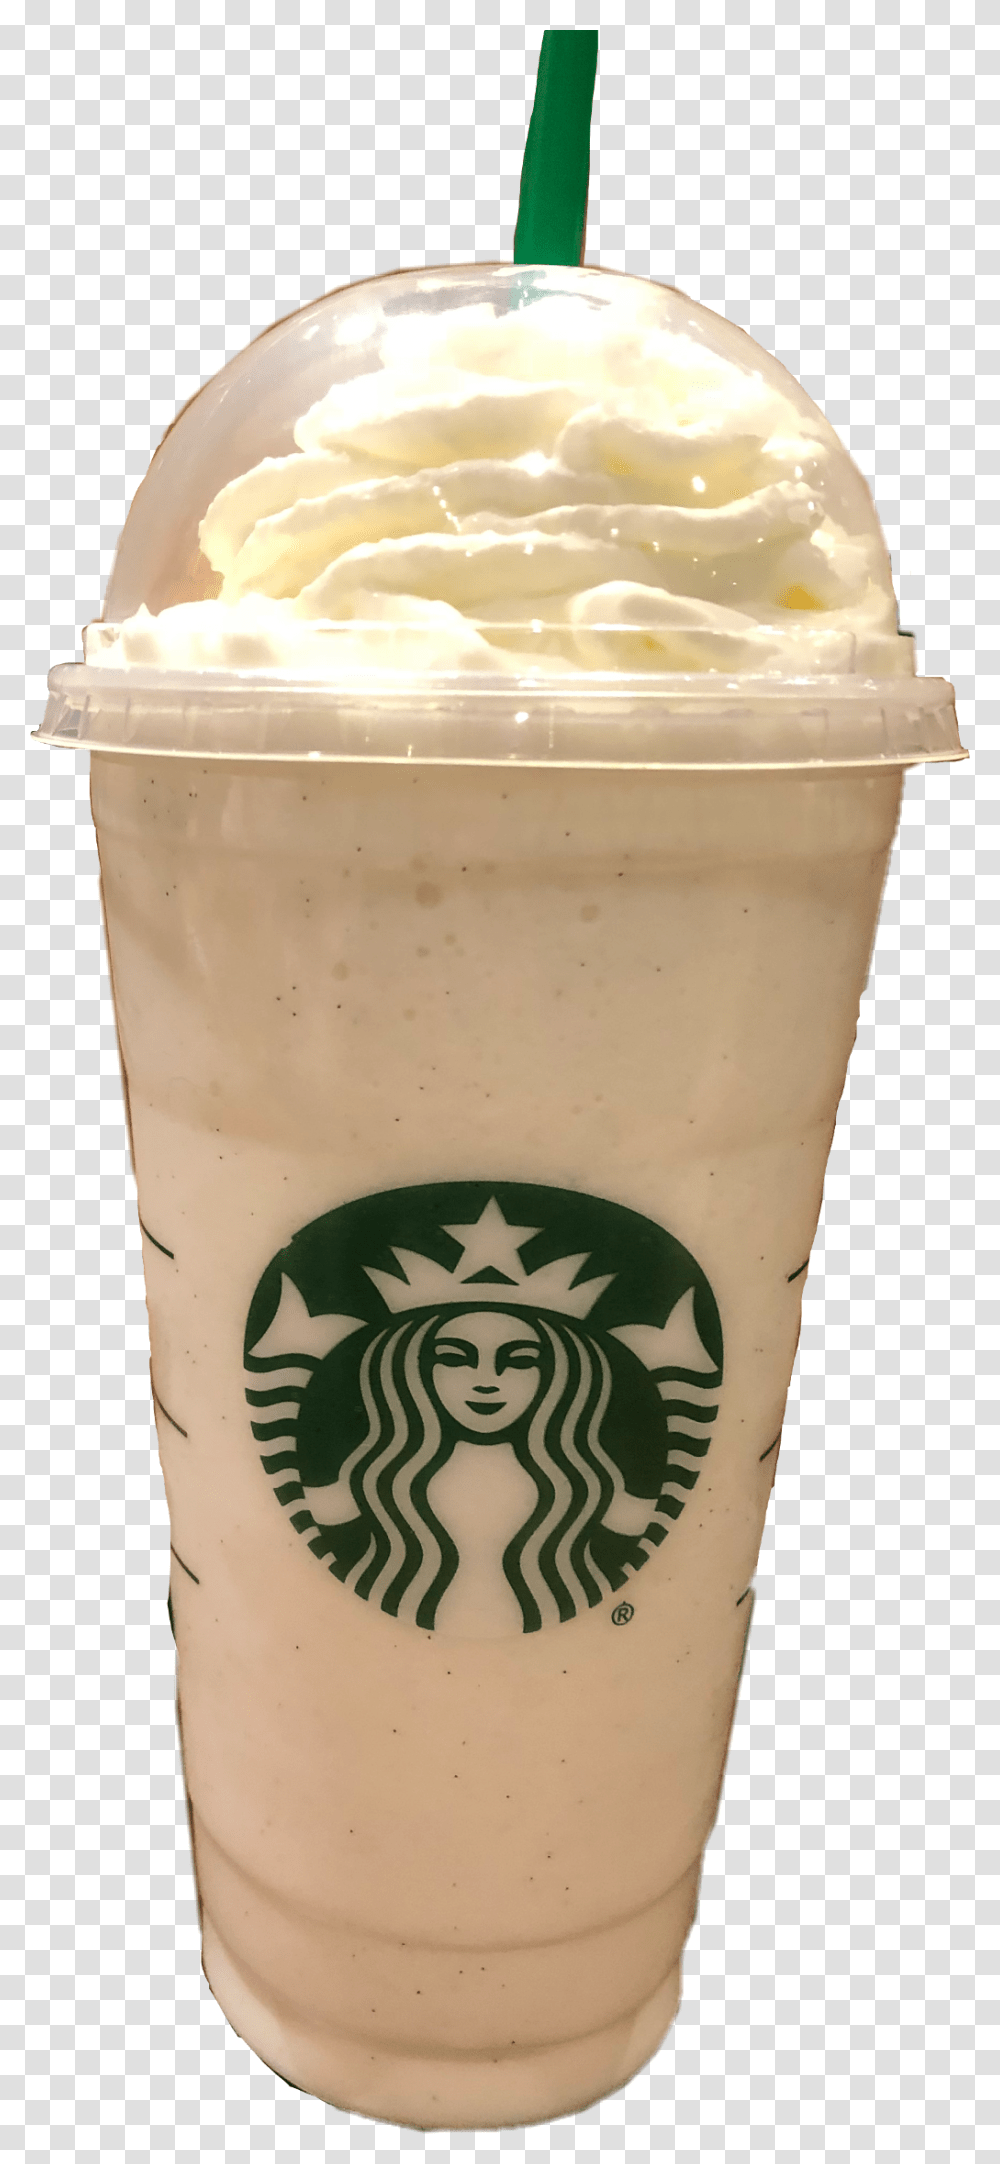 Starbucks New Logo 2011 Download Starbucks Logo 2011, Milk, Beverage, Drink, Dessert Transparent Png